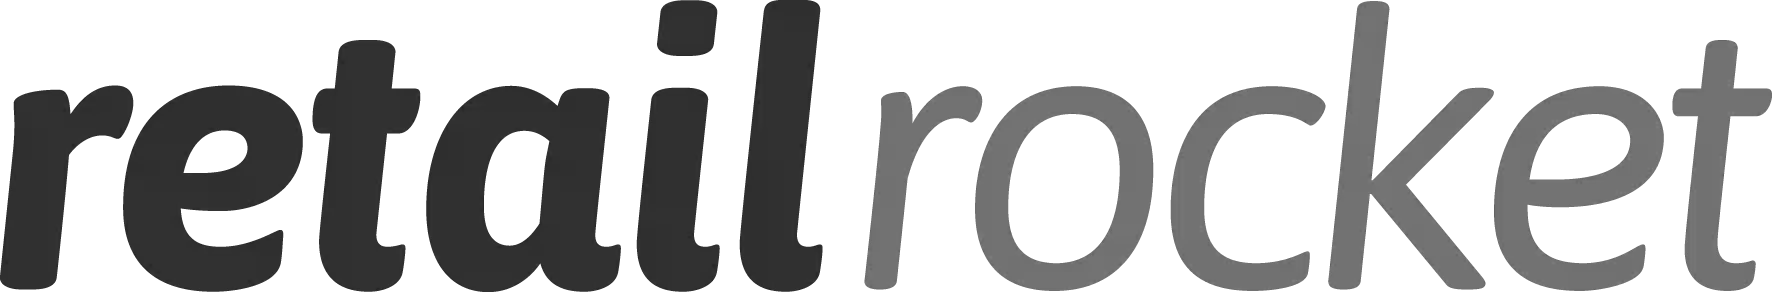 retail-rocket-logo-oficial